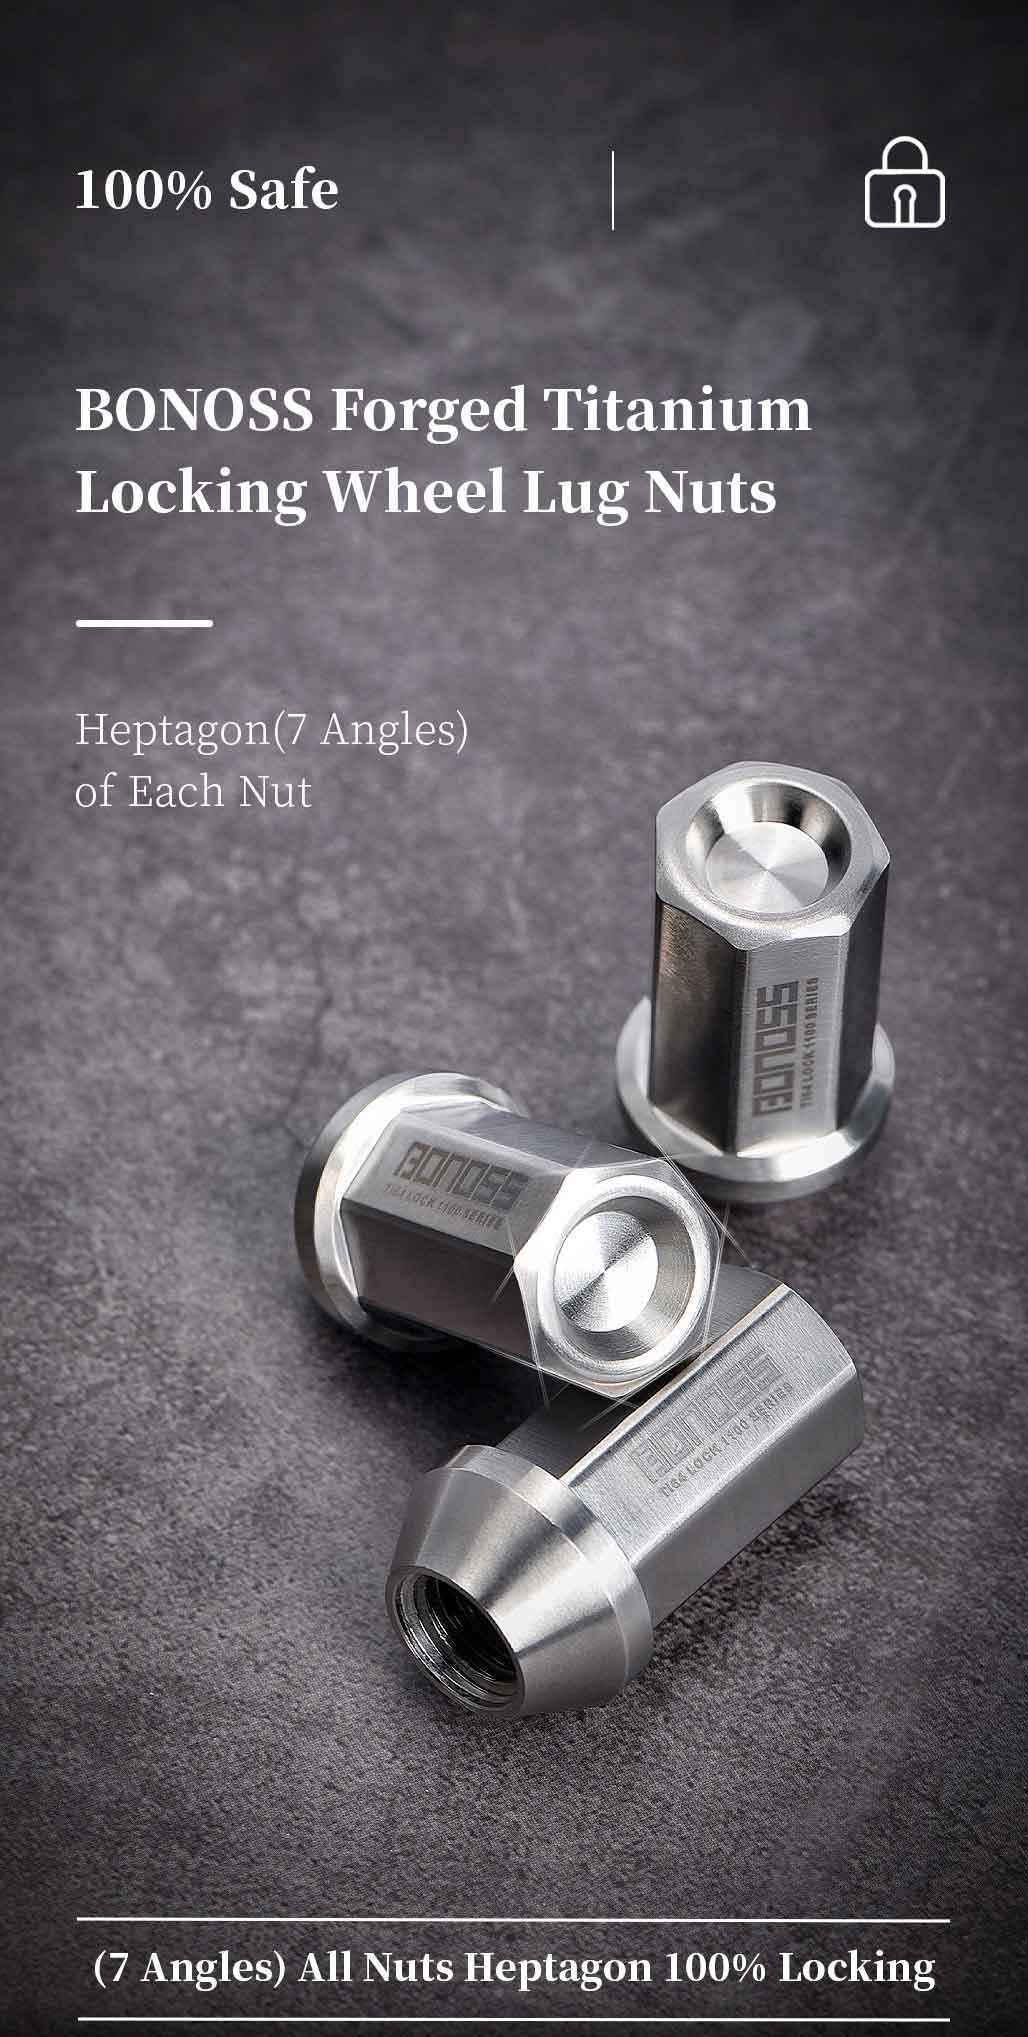 BONOSS-forged-titanium-locking-wheel-lug-nuts-heptagon-of-each-nut-by-grace-1